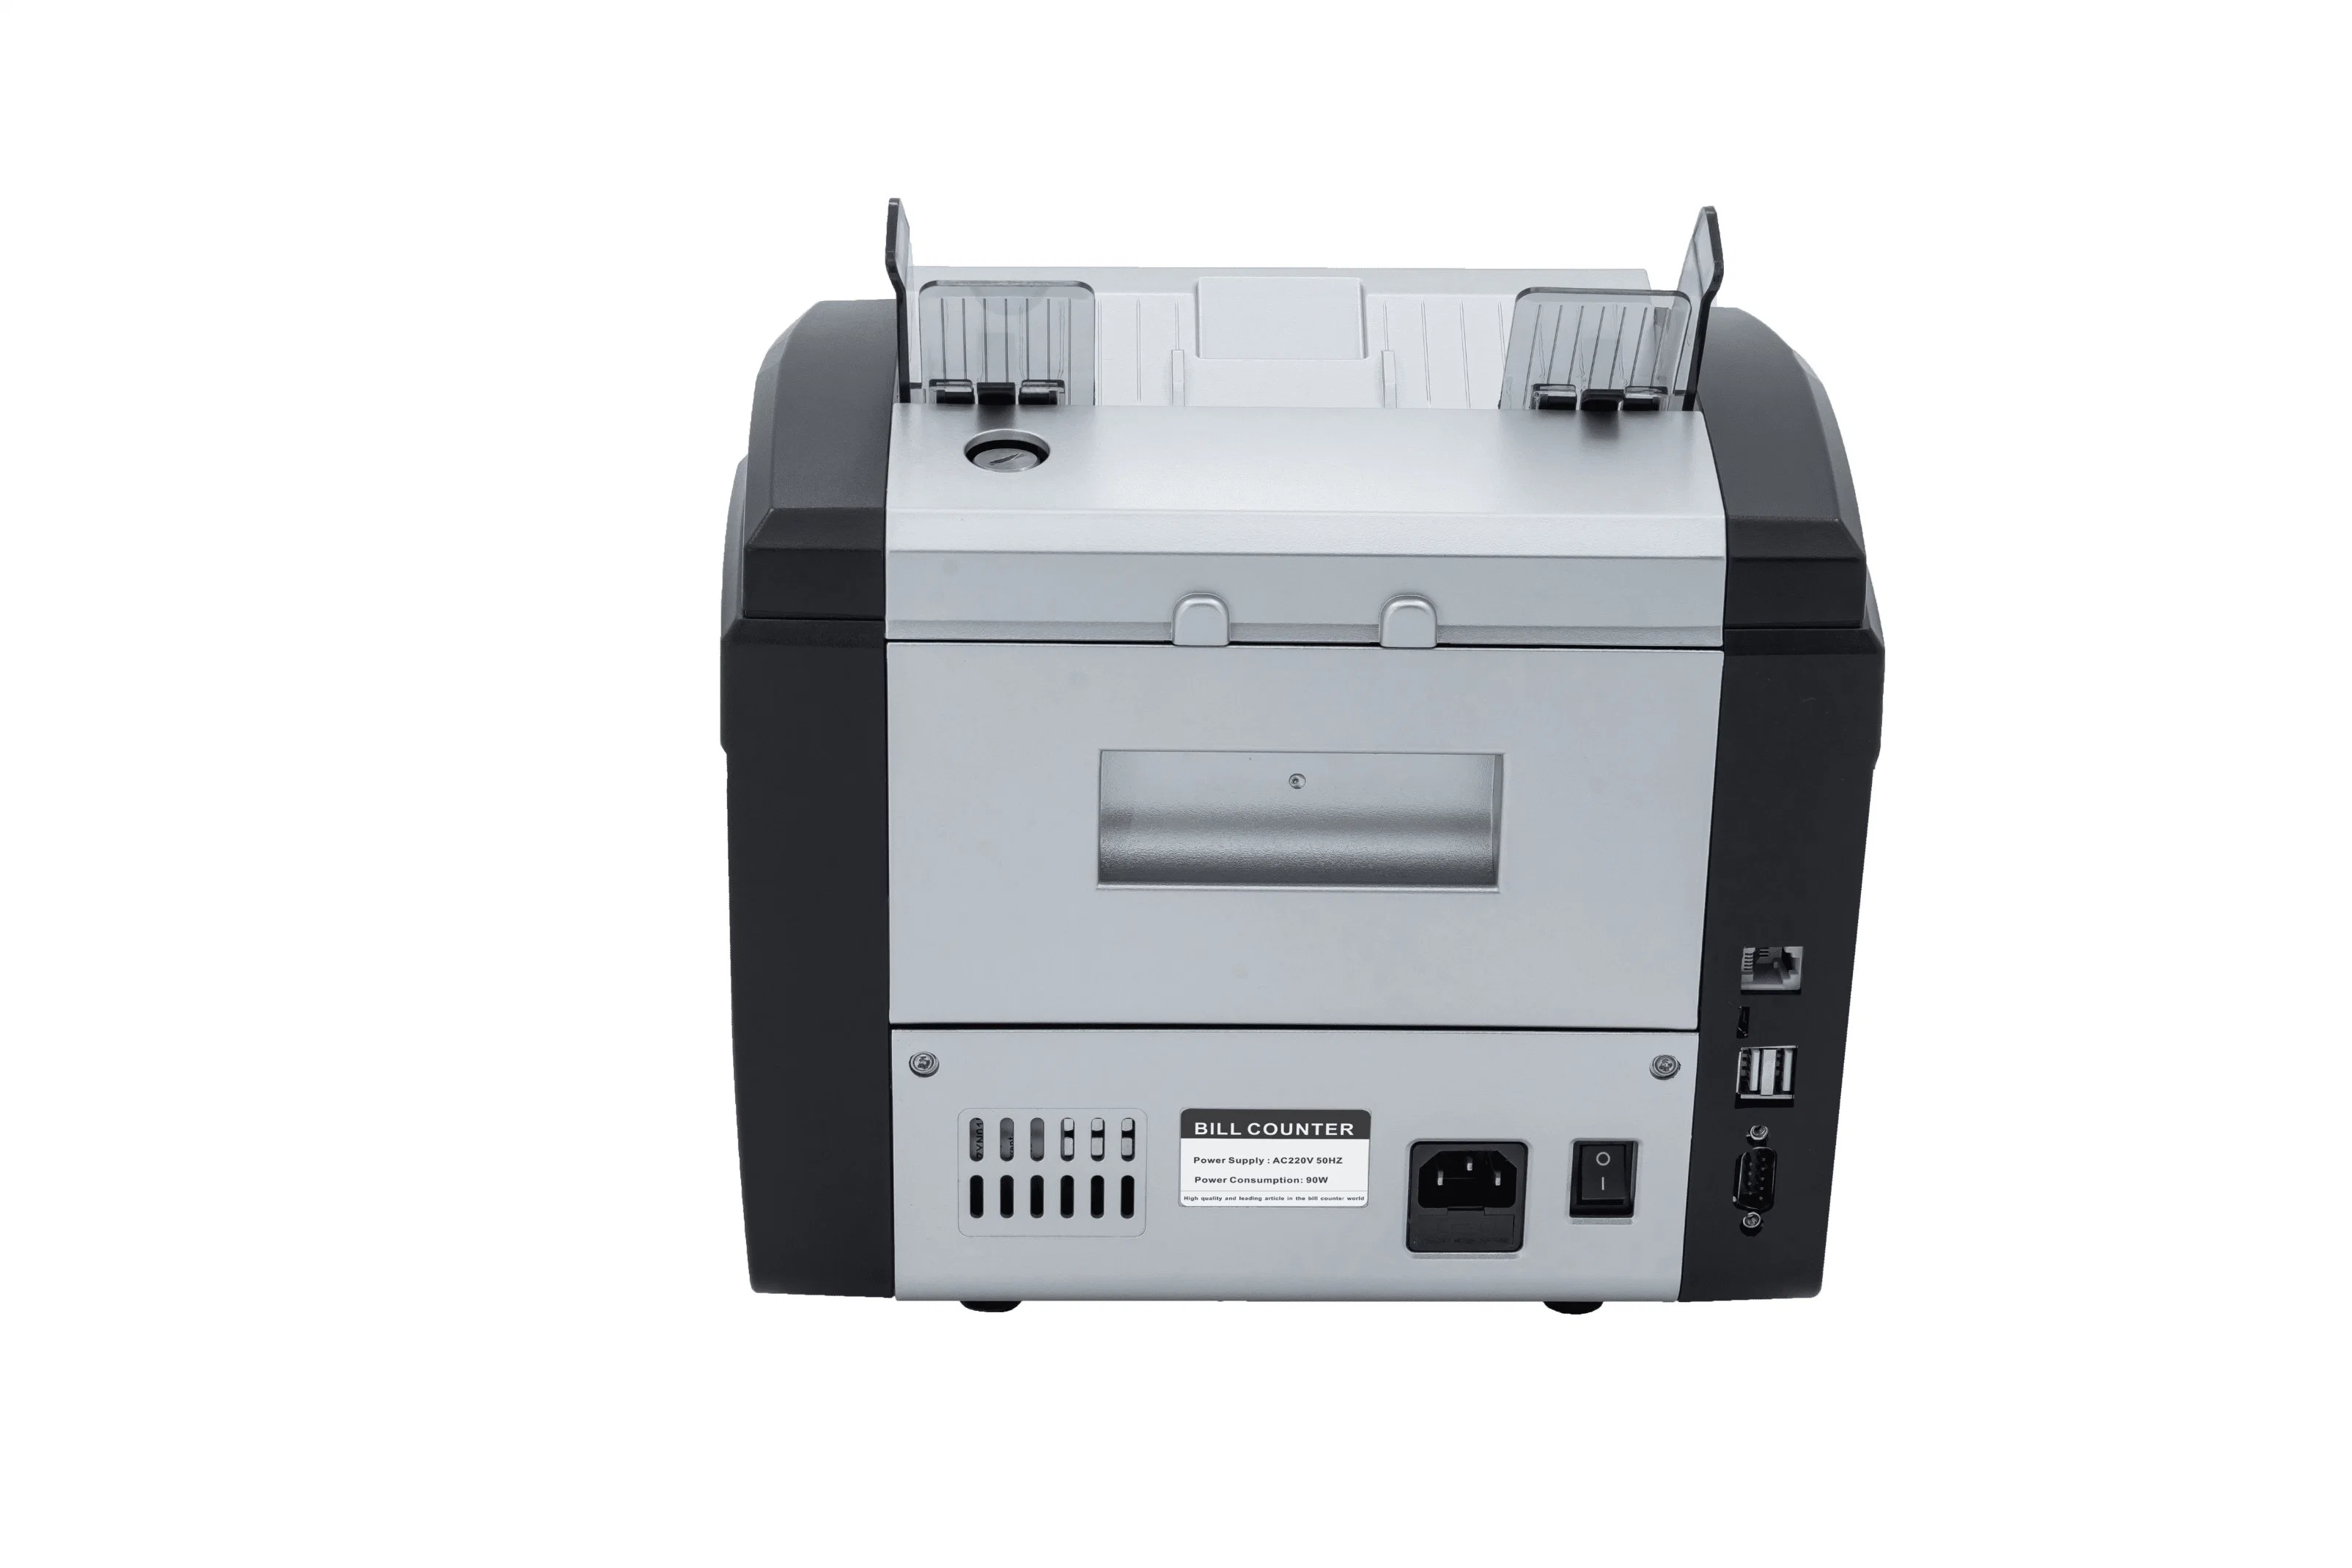 Jn-1689 Cis Top Loading Bill Counter Machines Money Counter Machine